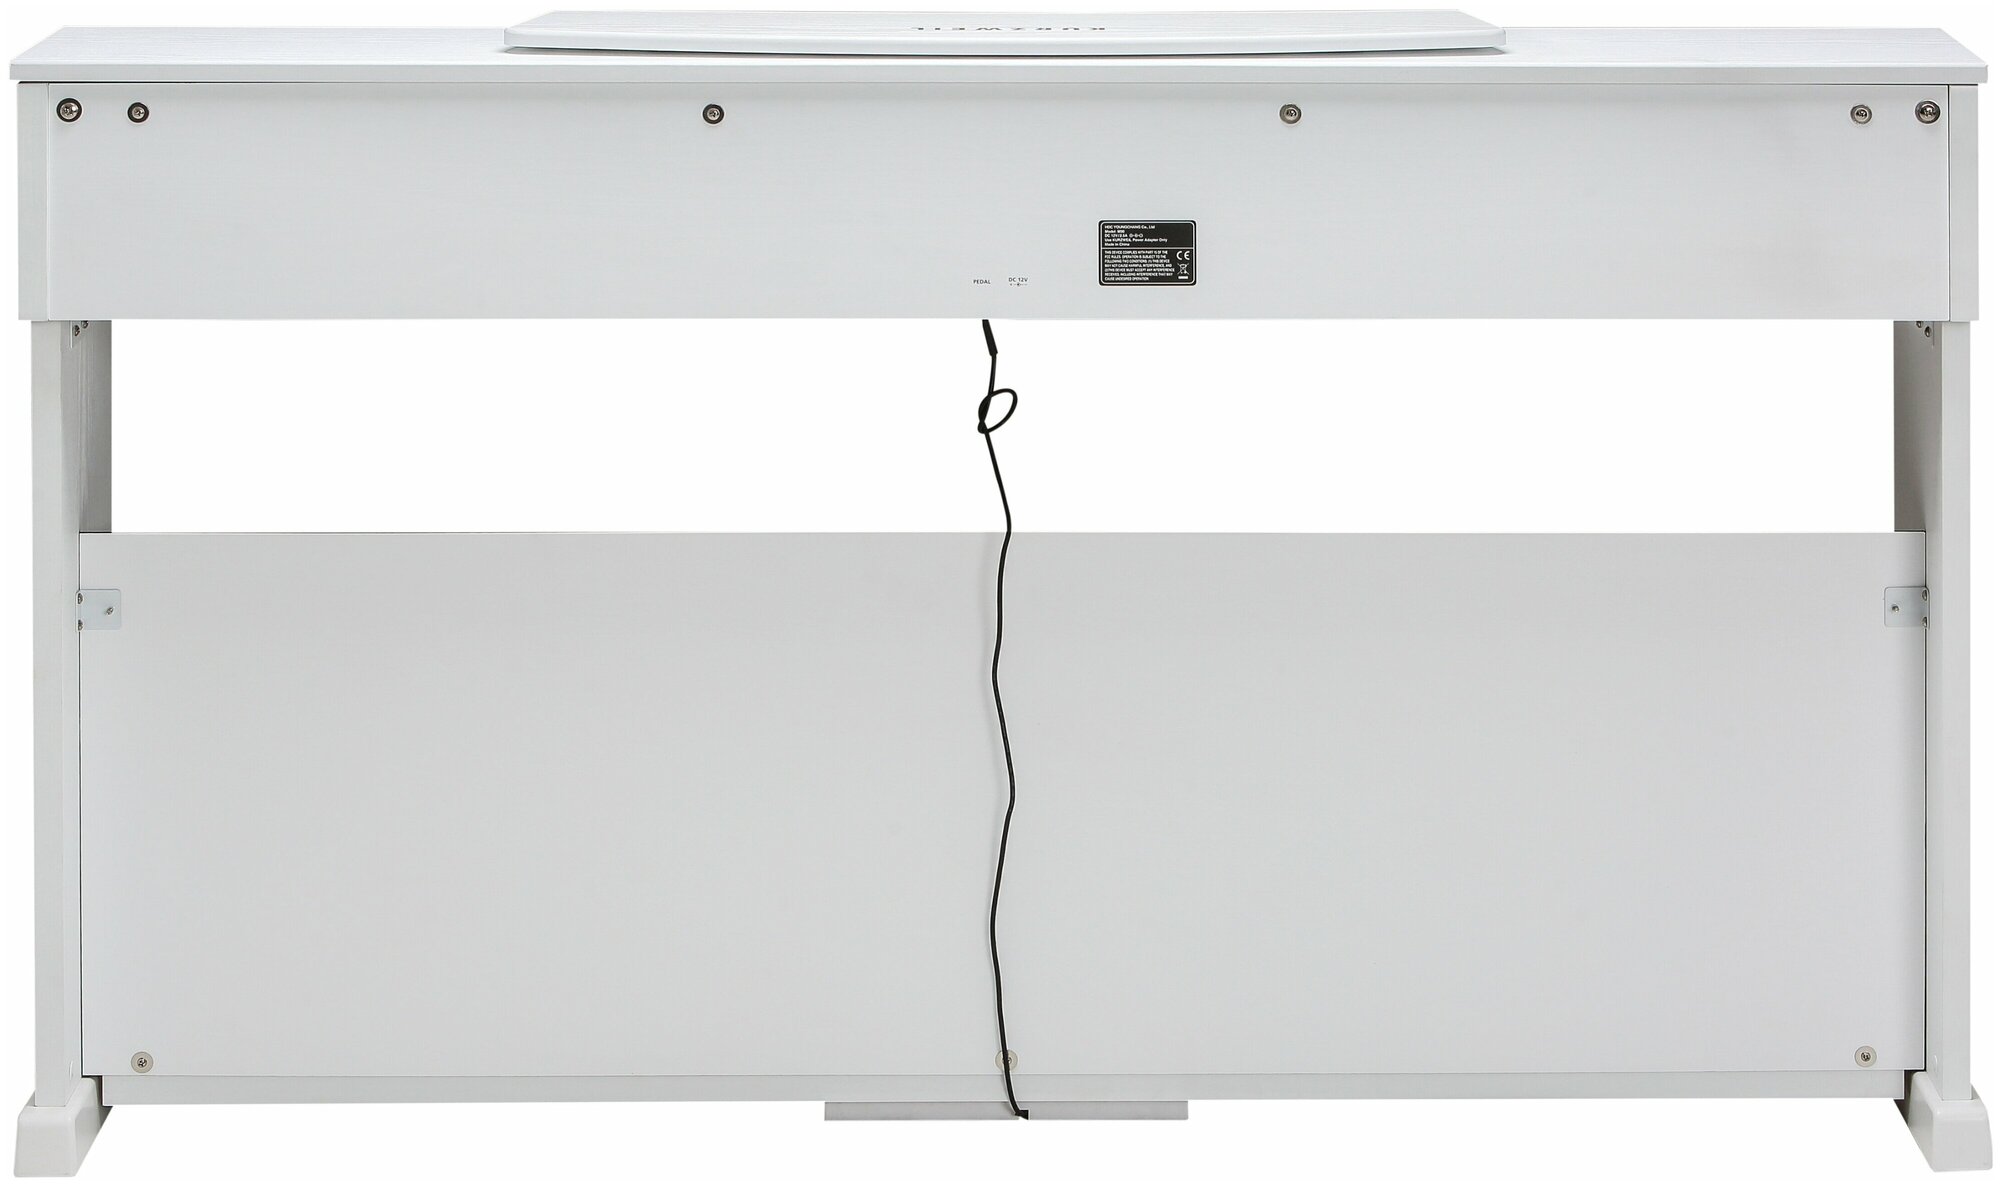 Цифровое фортепиано Kurzweil - фото №14